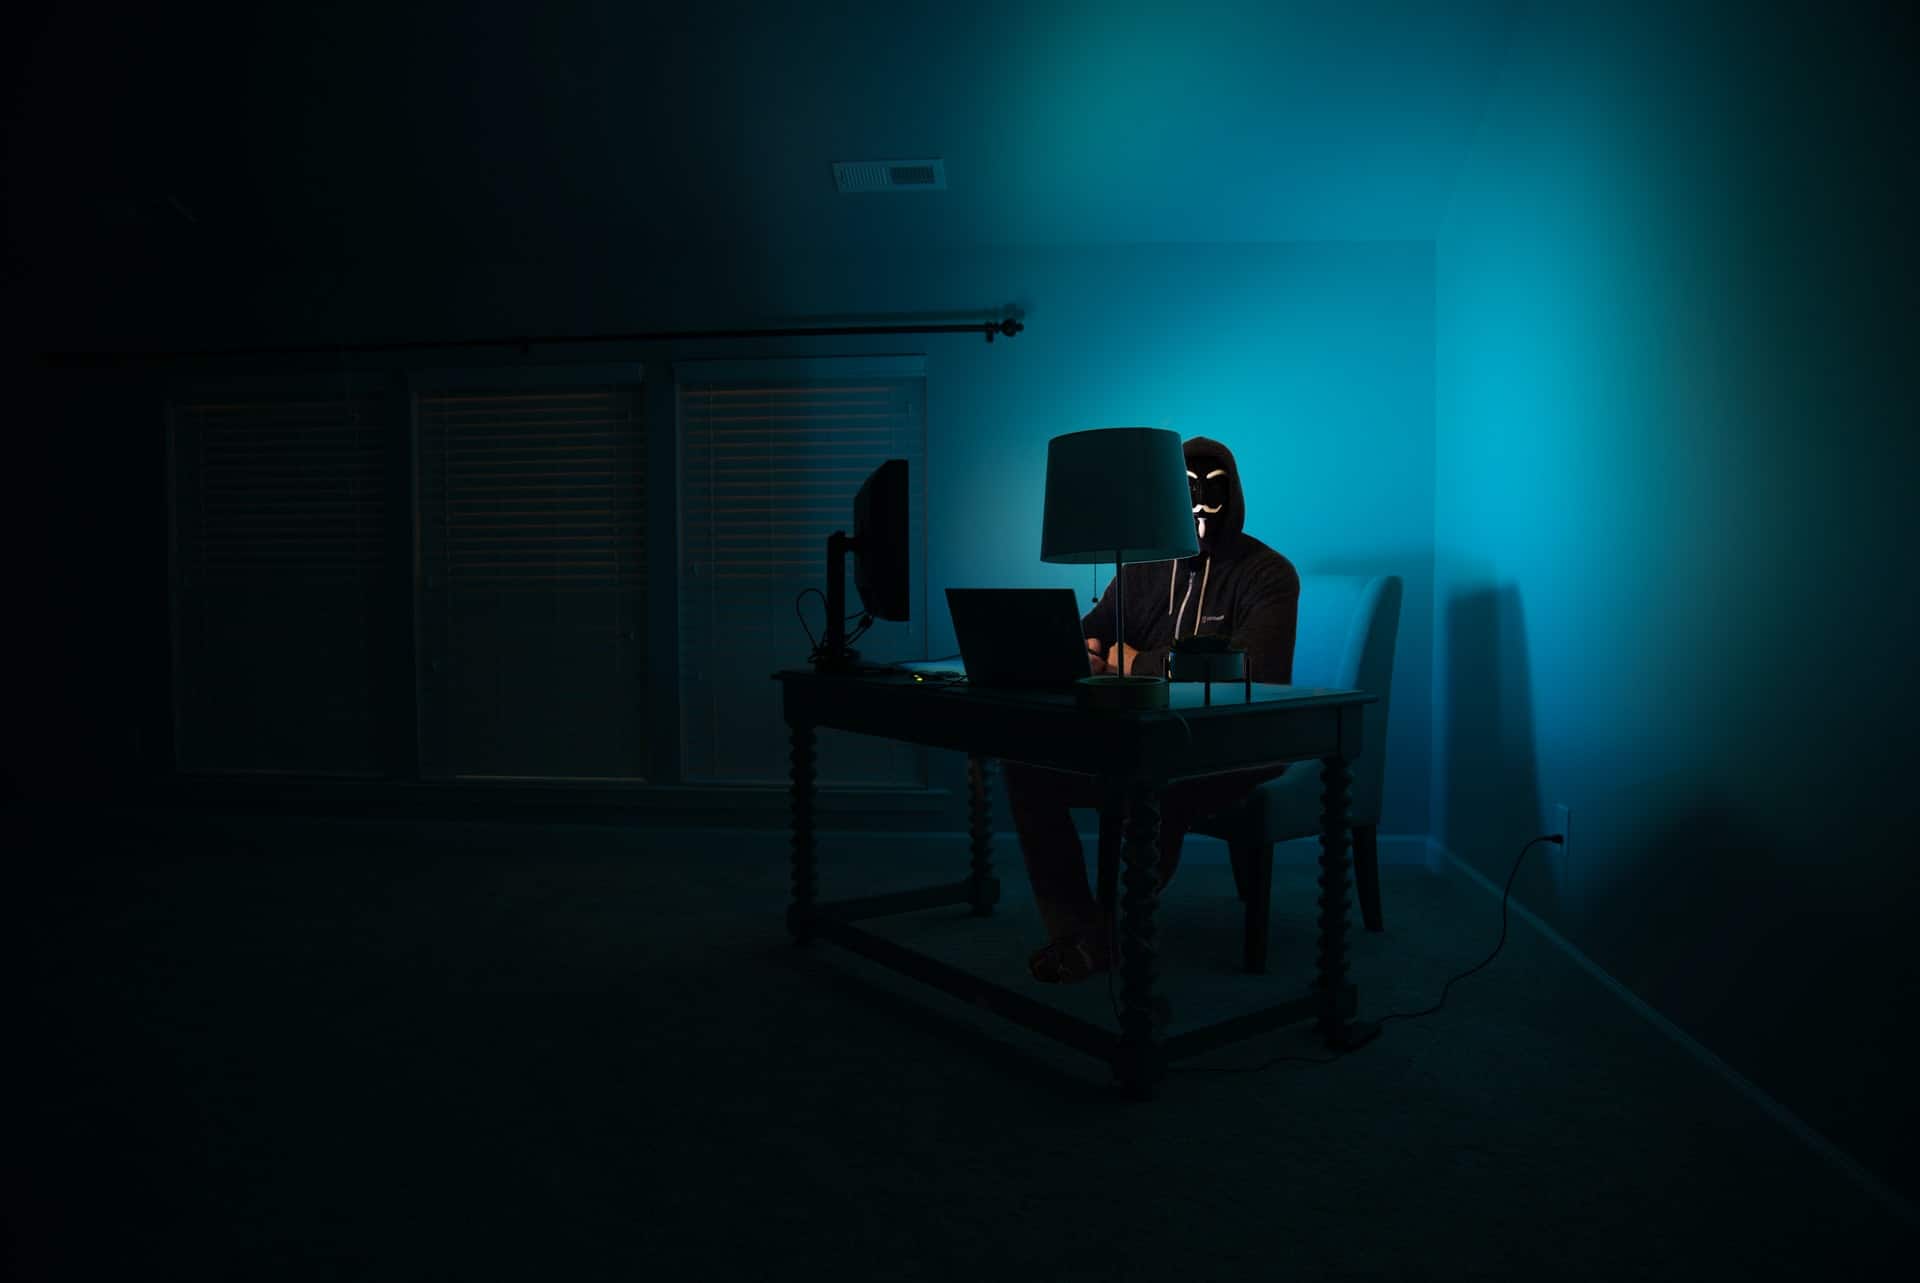 Hacker in dark room